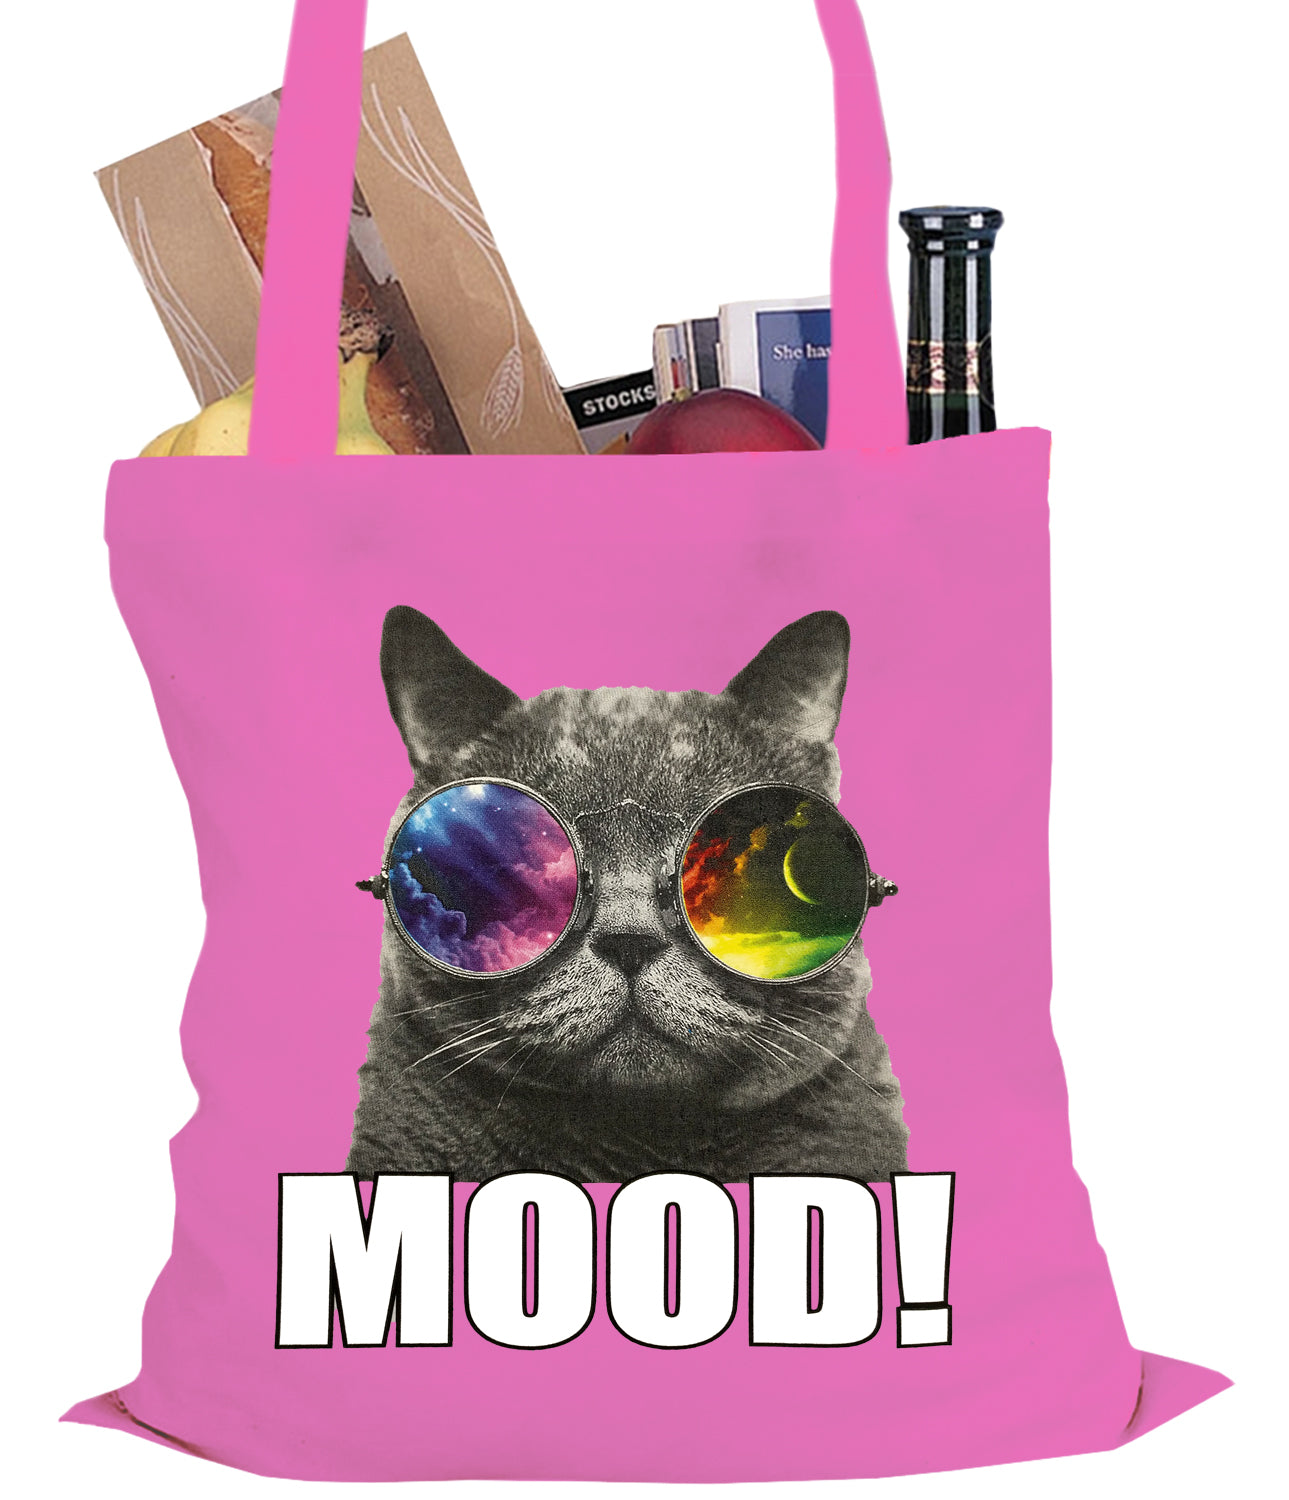 Spaced Mood Cat Tote Bag